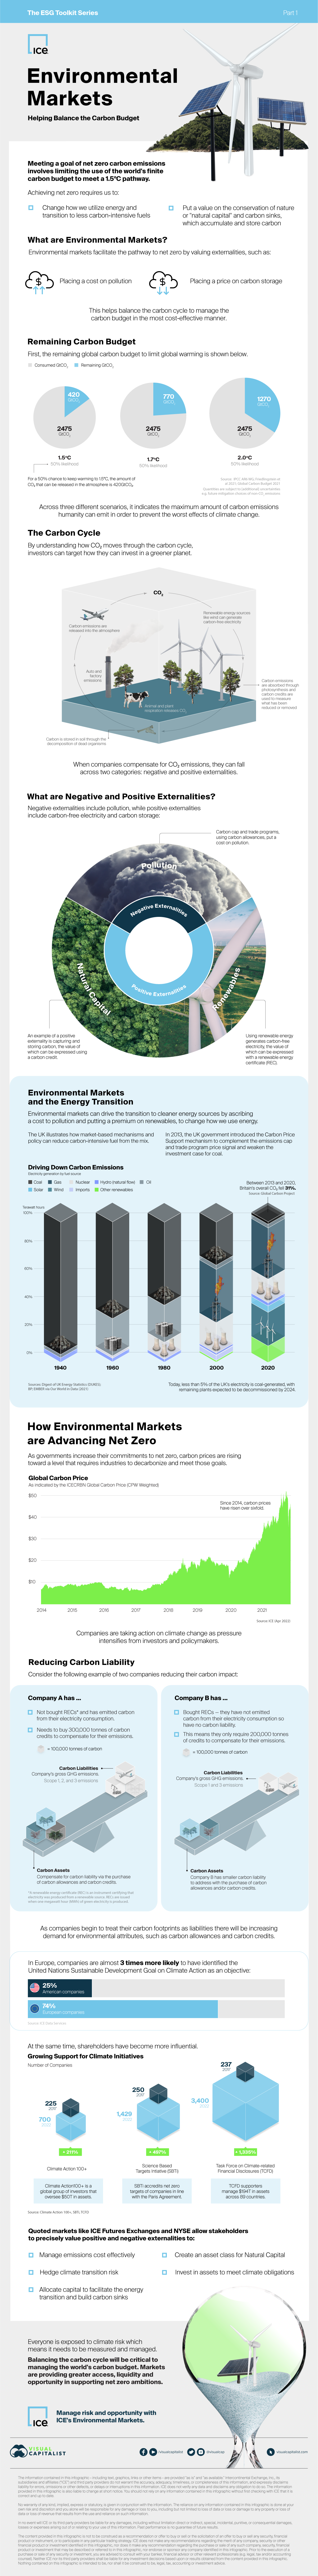 How Environmental Markets are Advancing Net Zero